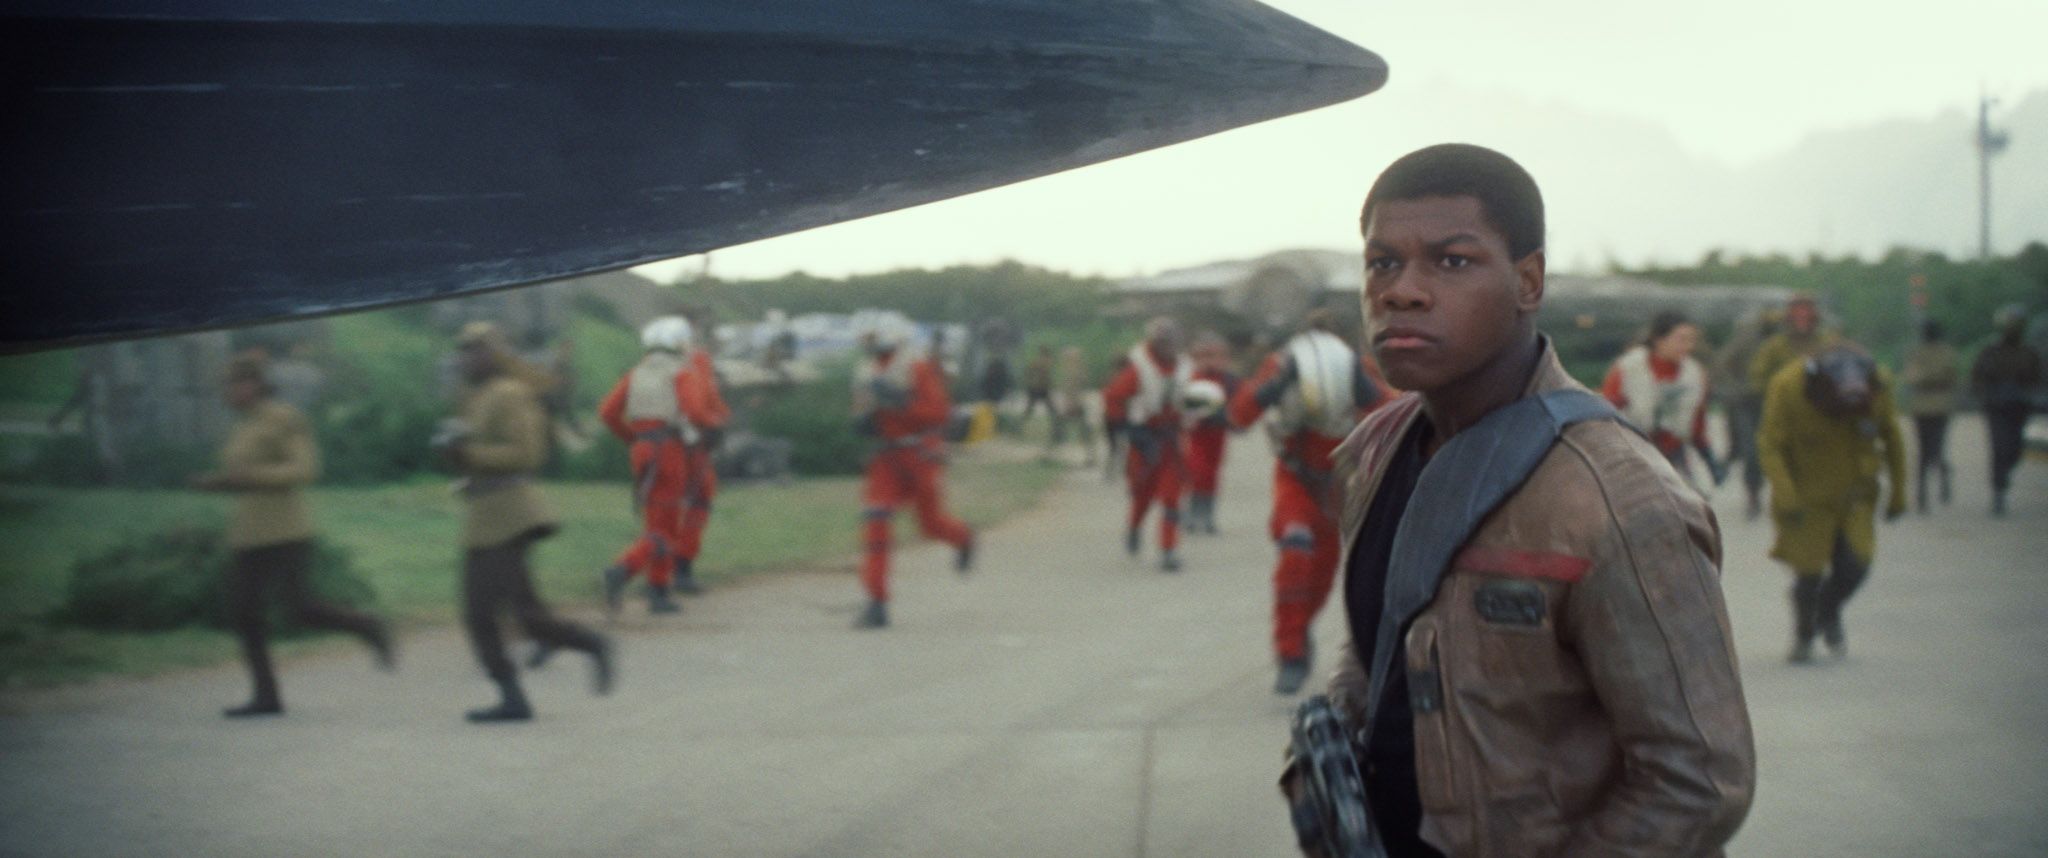 Star Wars 7 Trailer #3 - Finn on Resistance Base